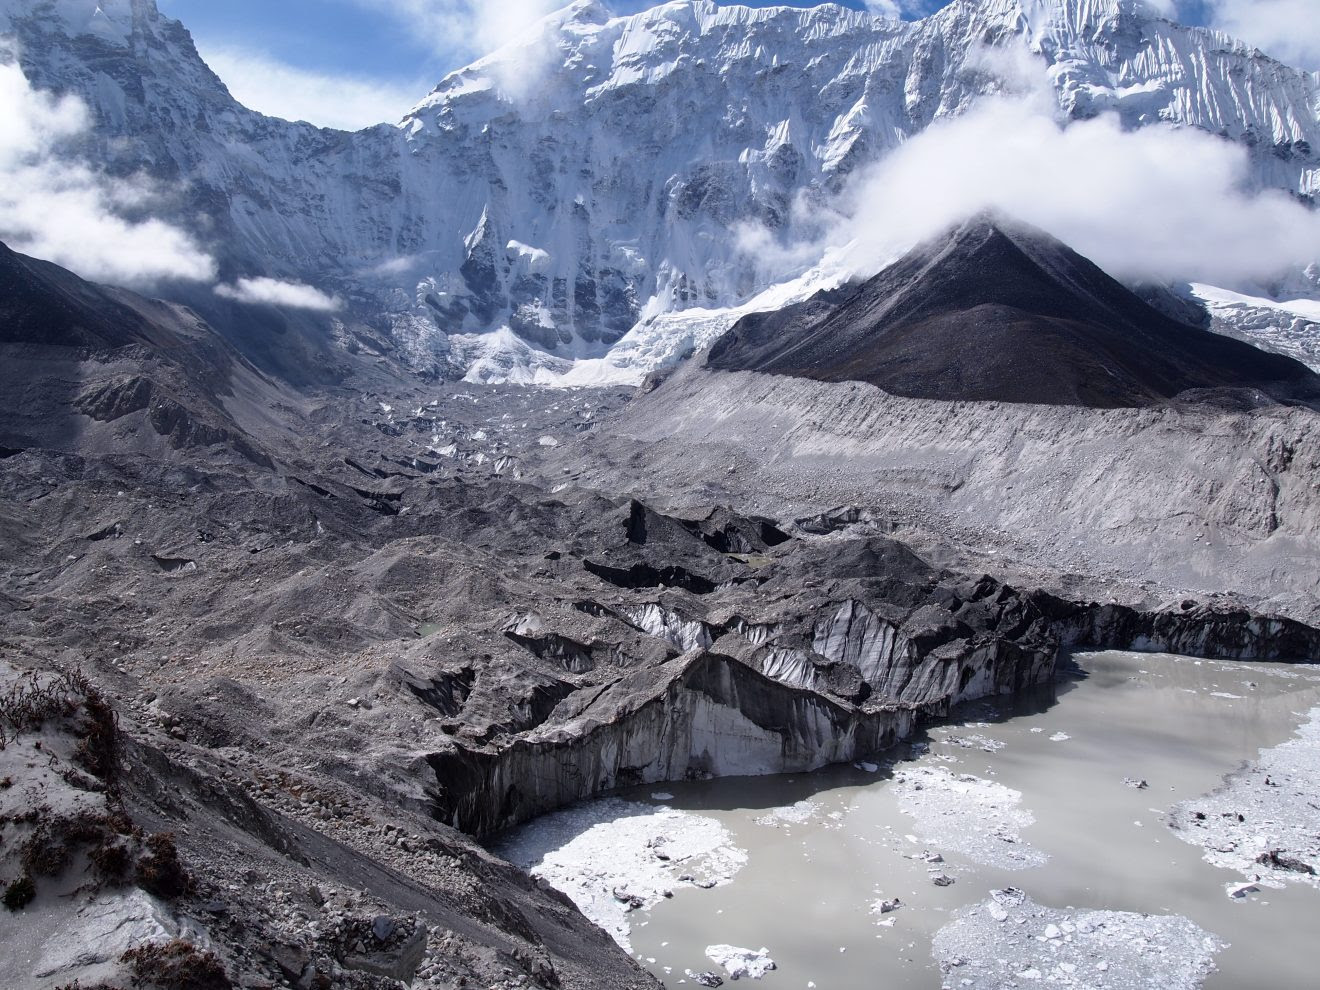 Asia's glaciers are big seasonal factor in river flow